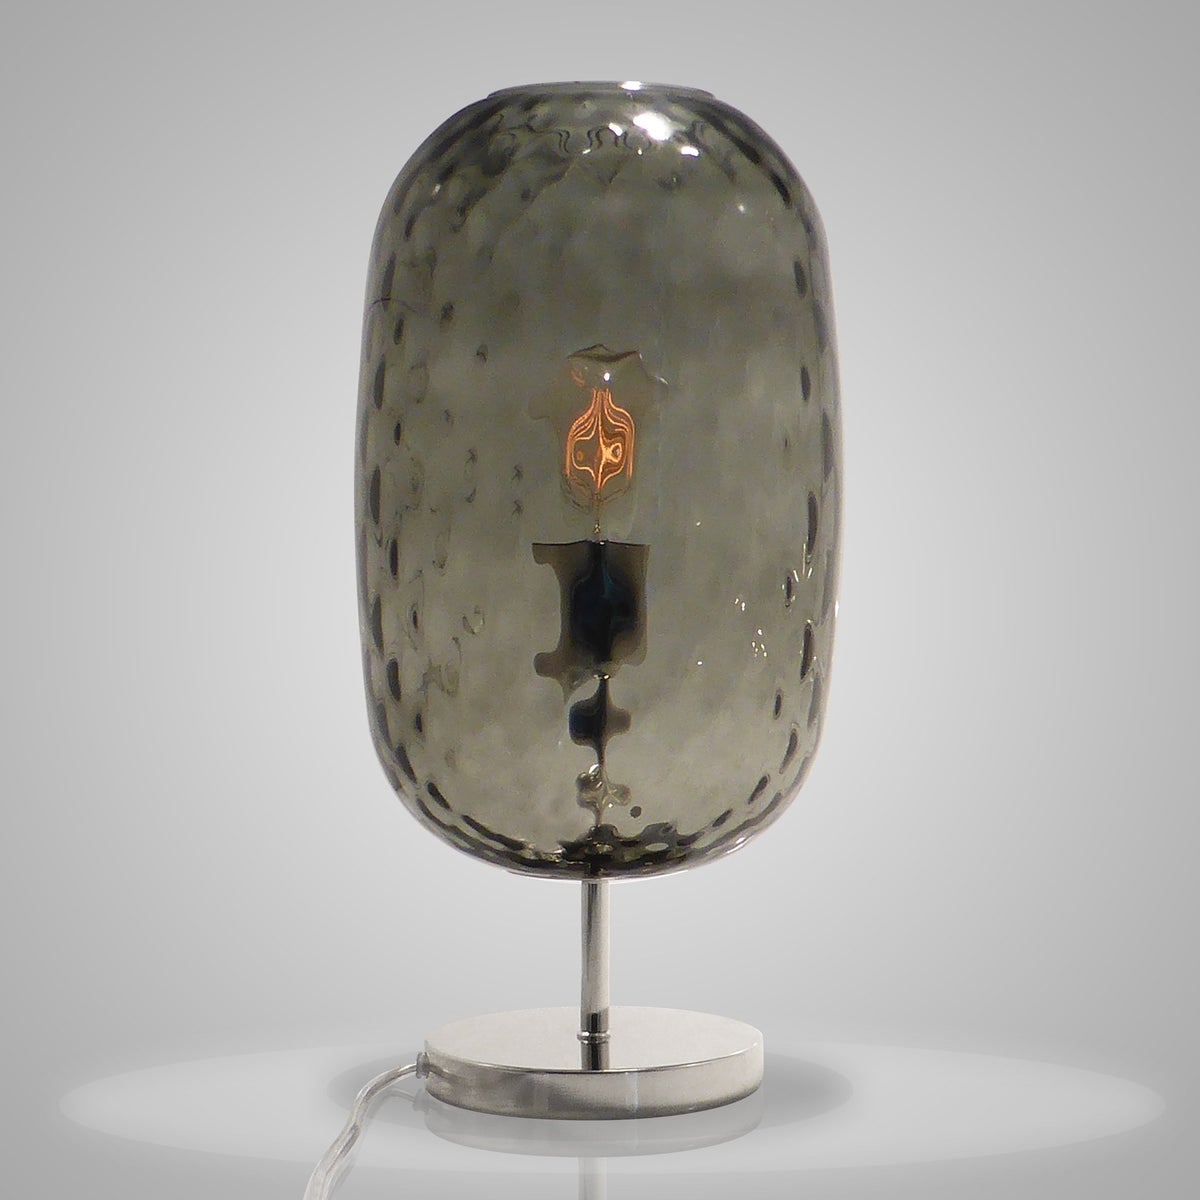 Charlotte Oval Table Lamp - Nickel, Smoke Green Tuft Glass